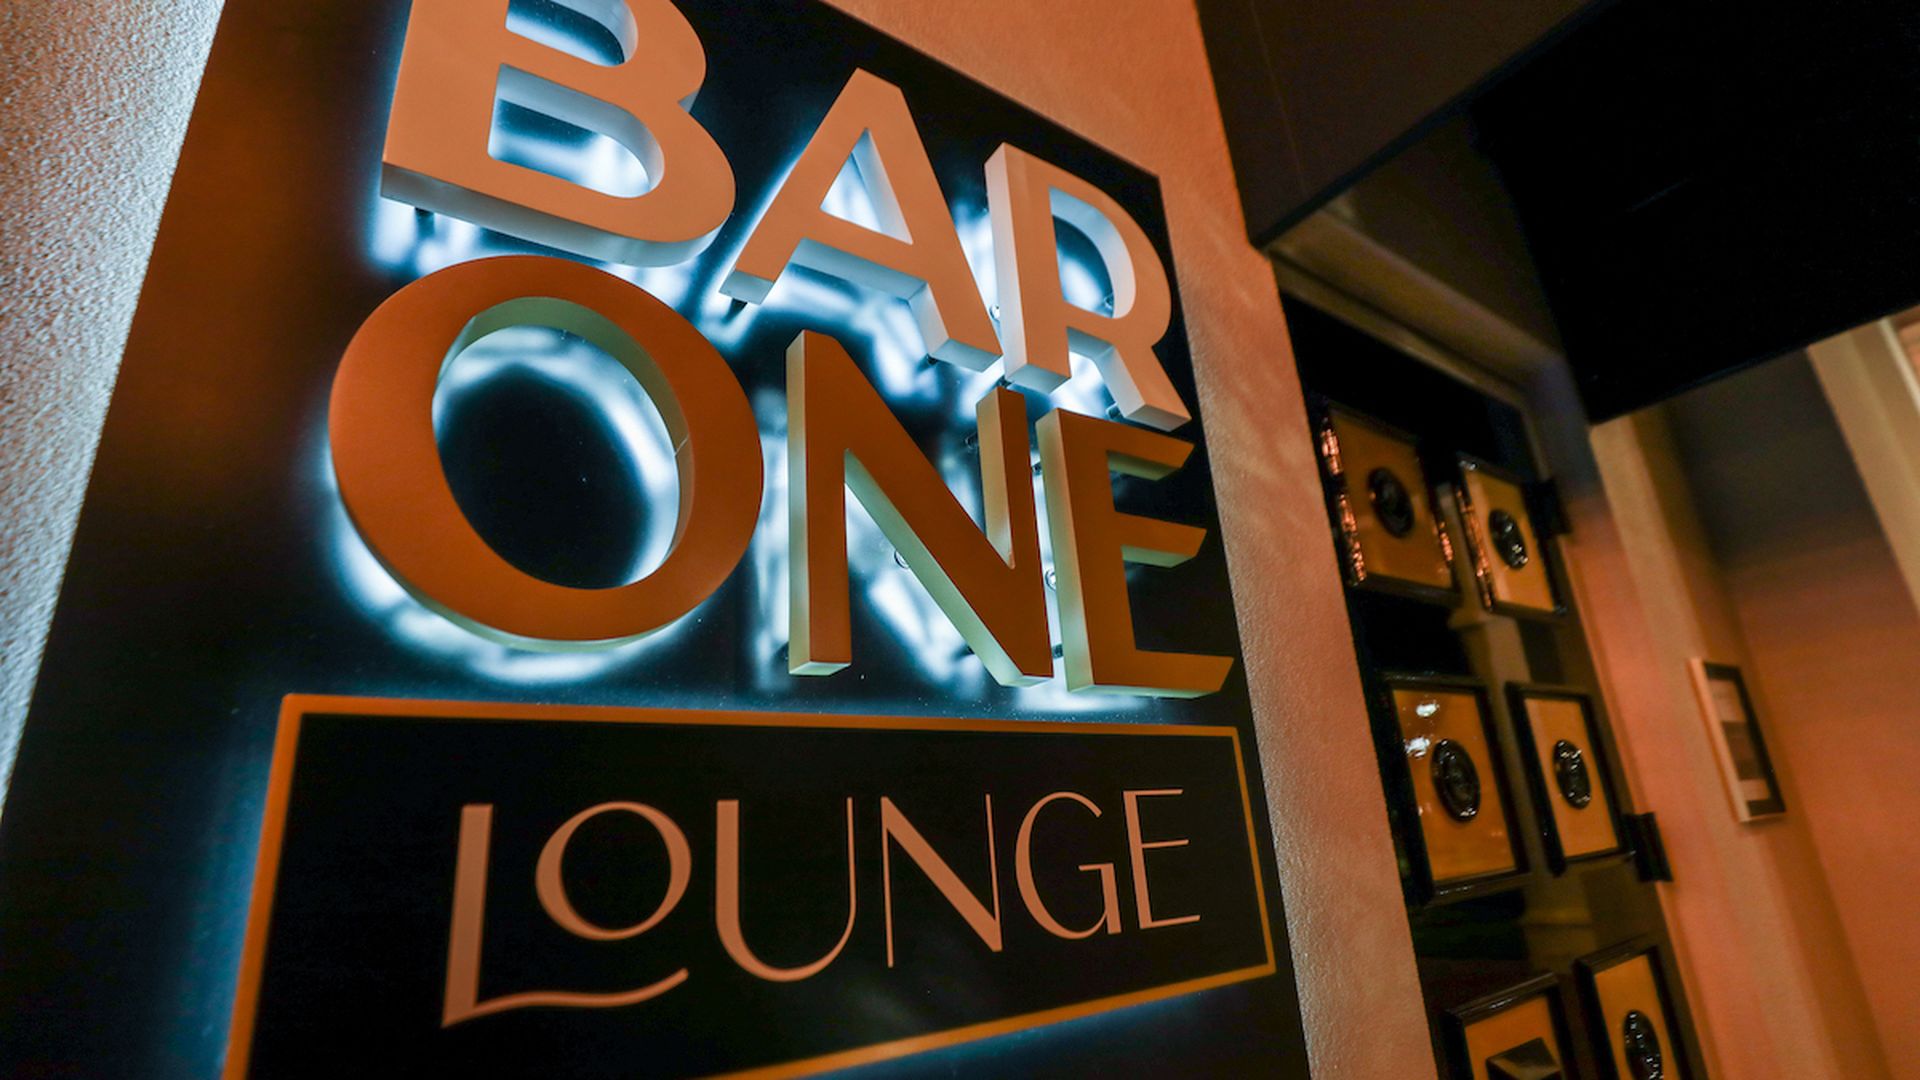 Bar one lounge